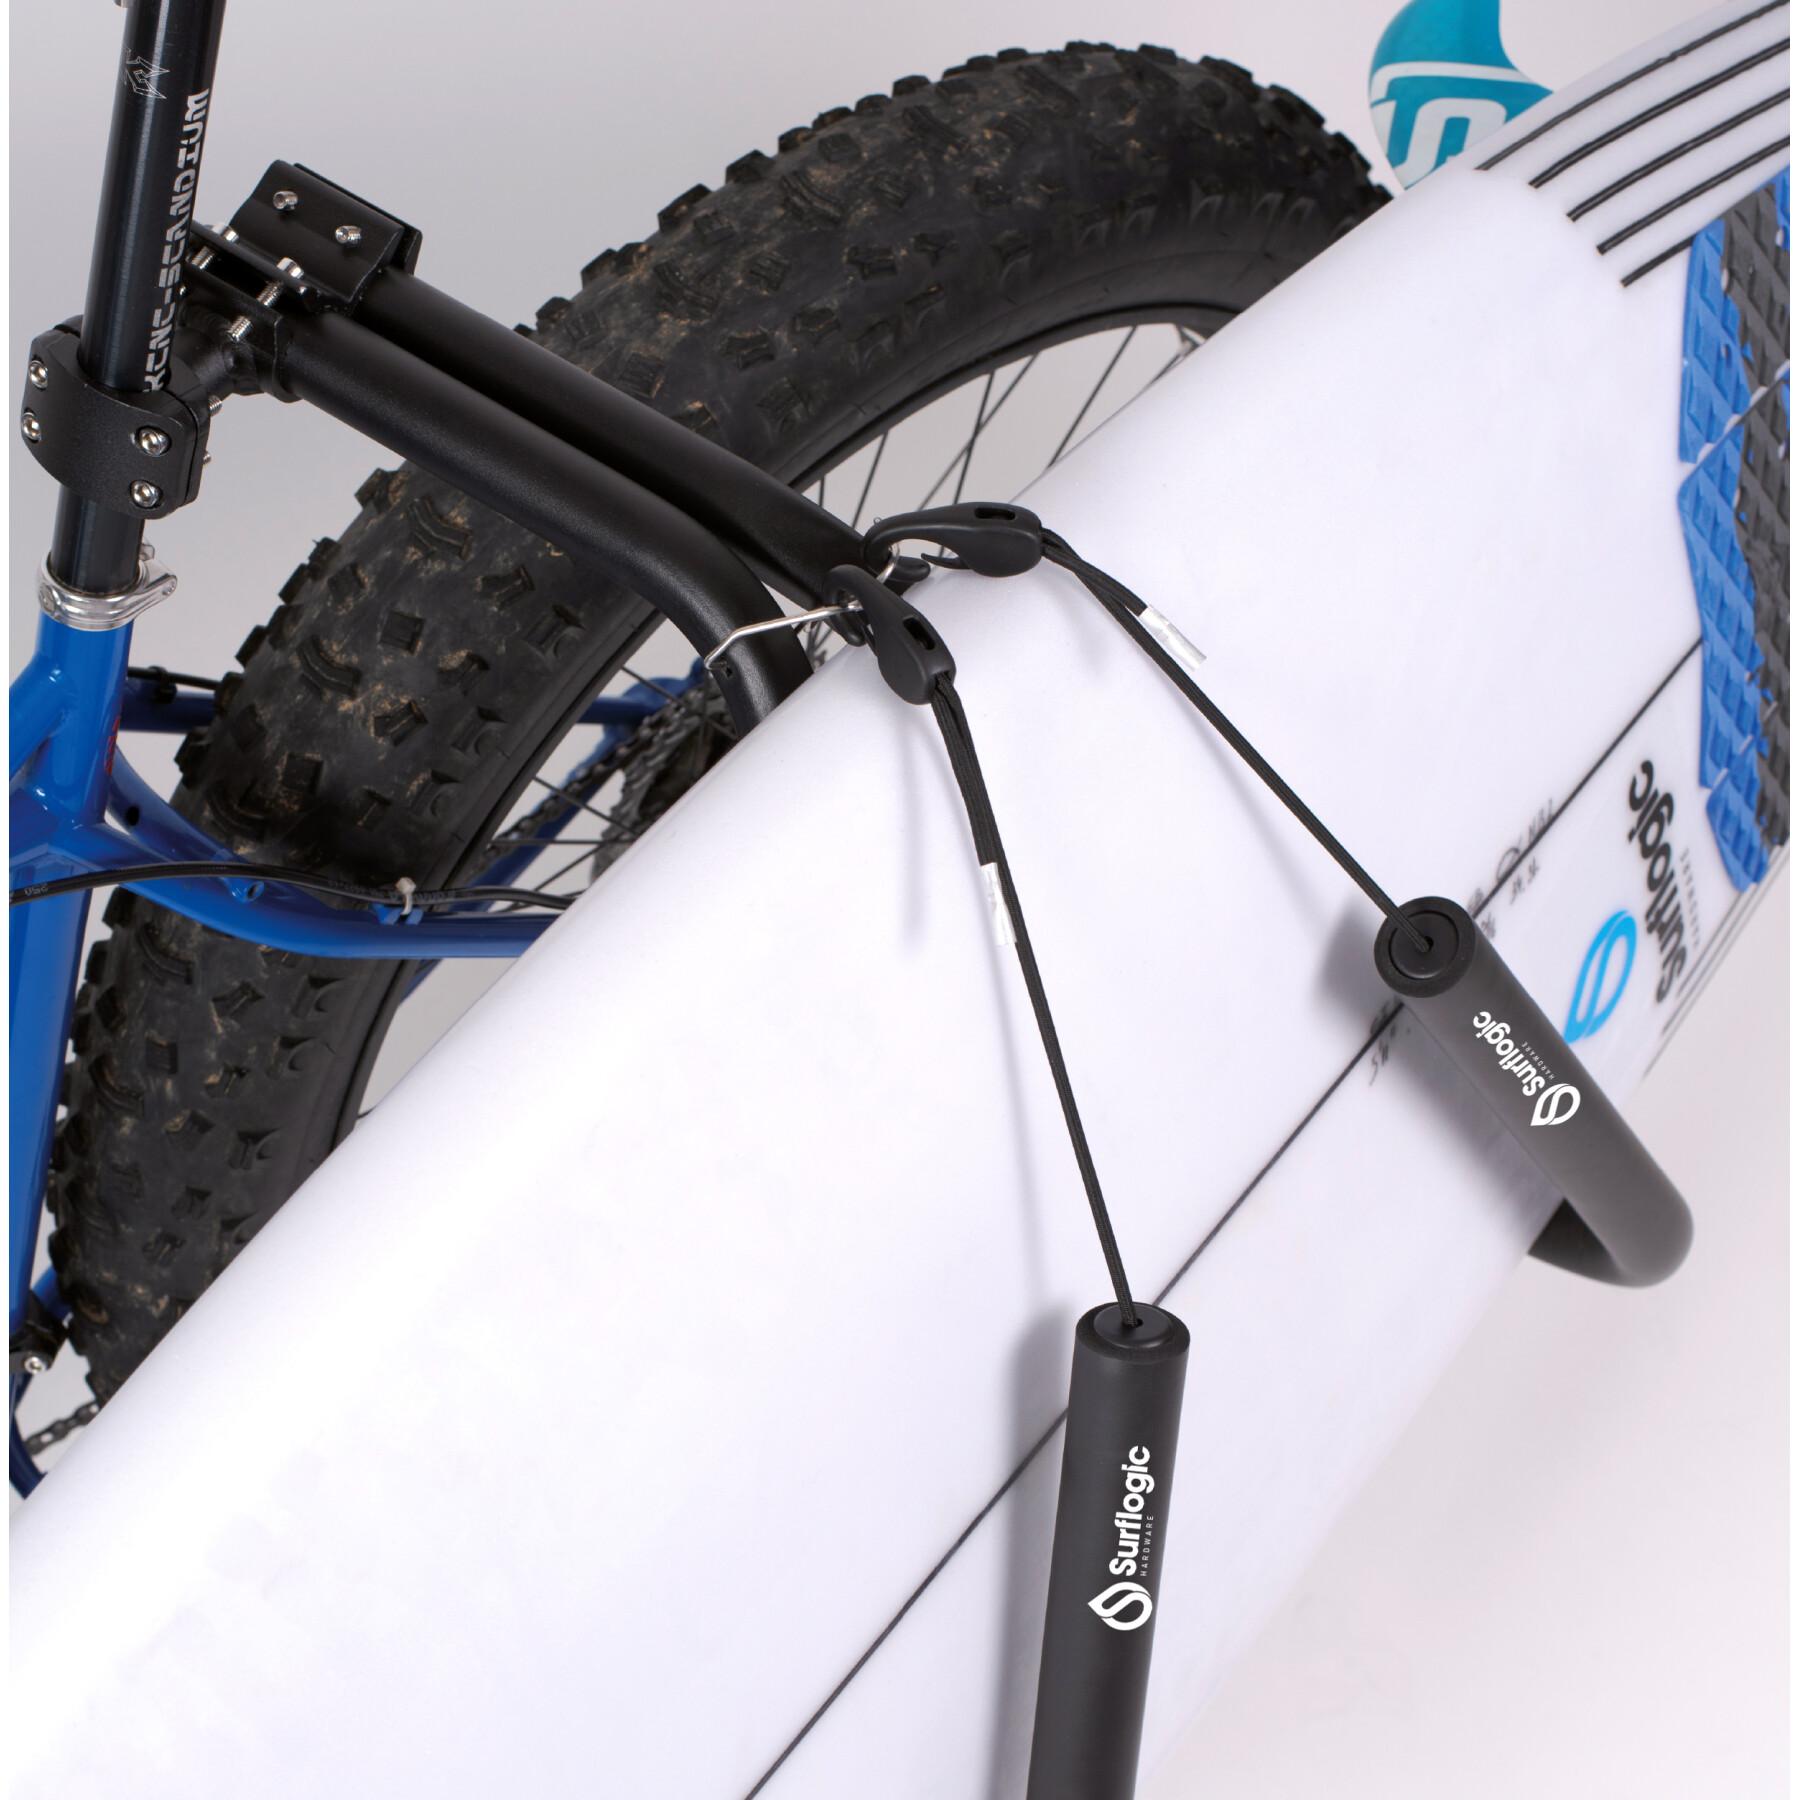 Bike rack for surfboards Surflogic